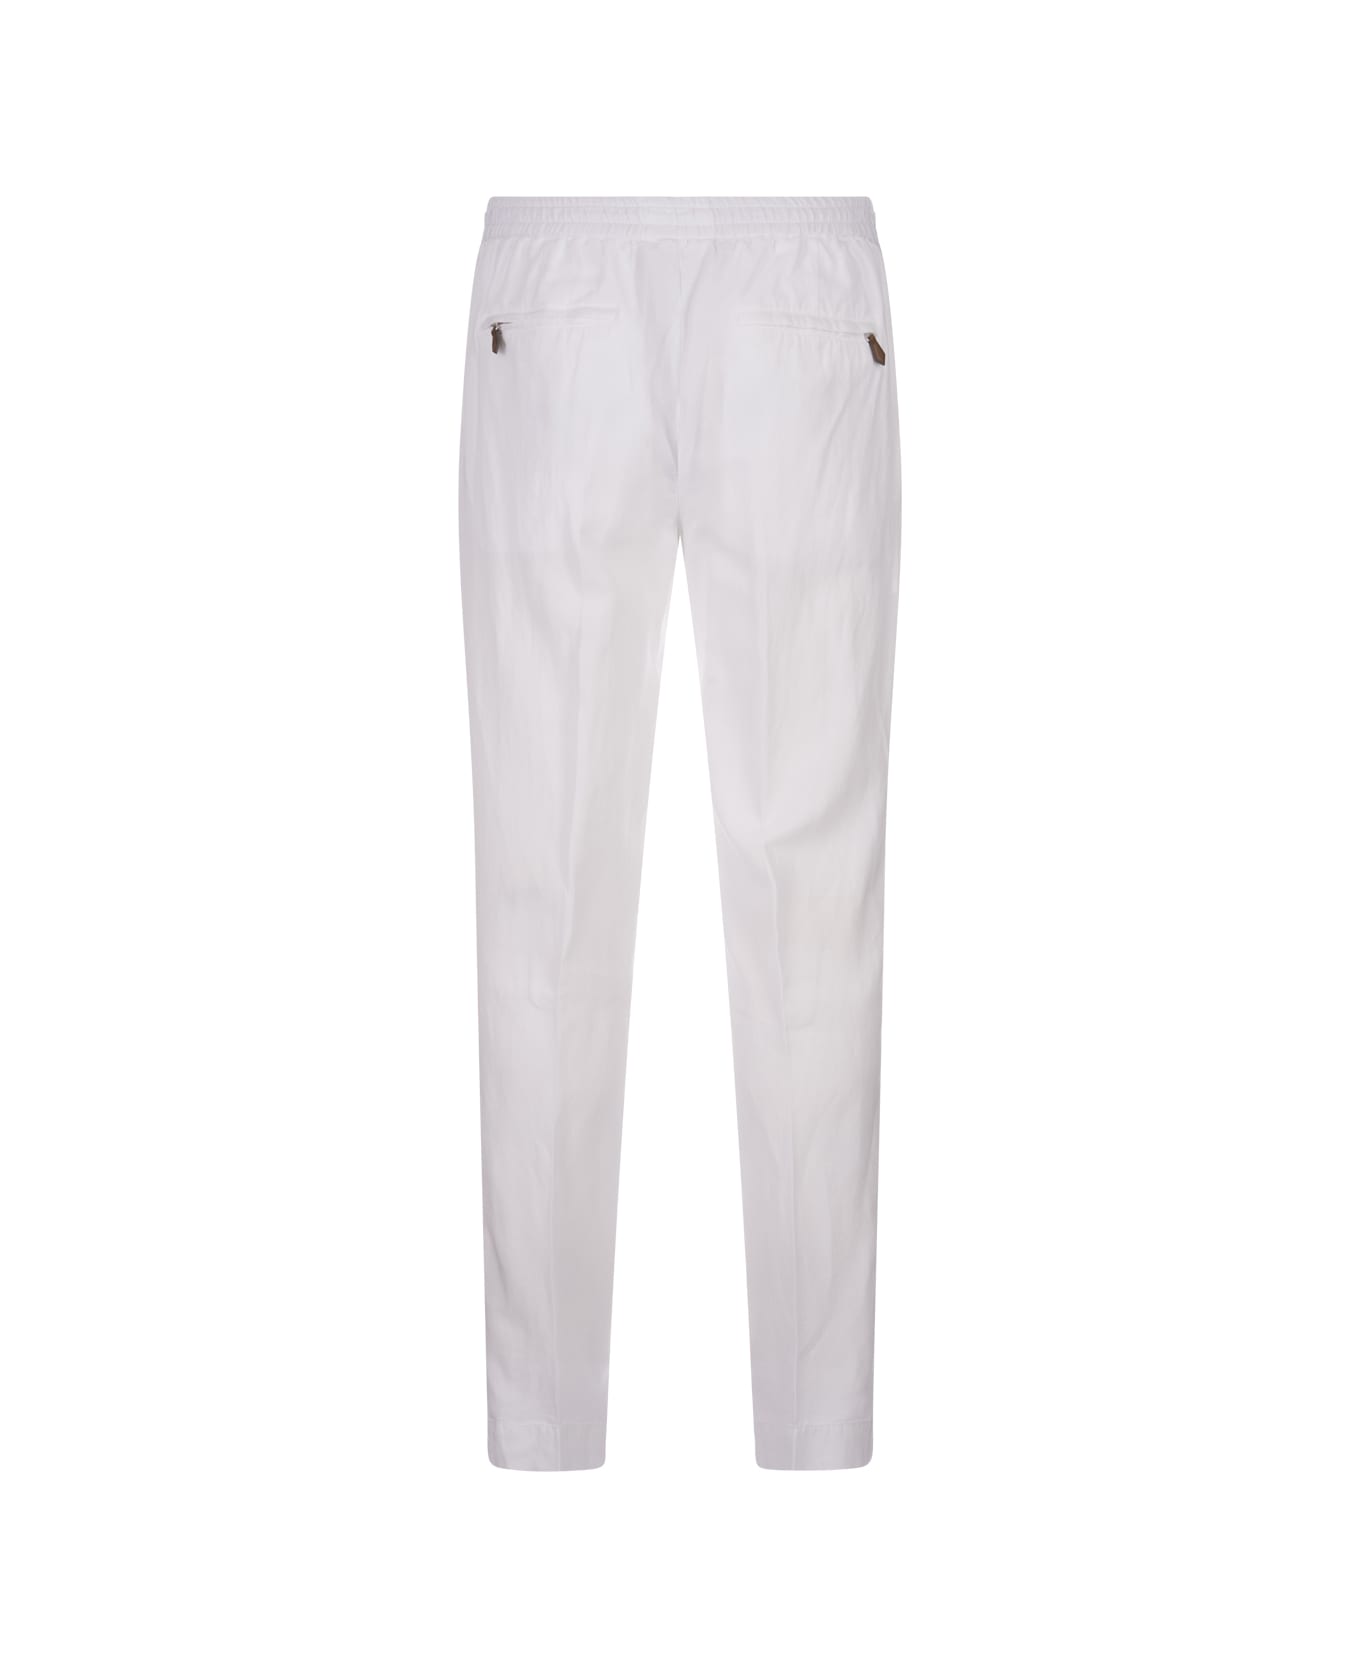 PT Torino White Linen Blend Soft Fit Trousers - White